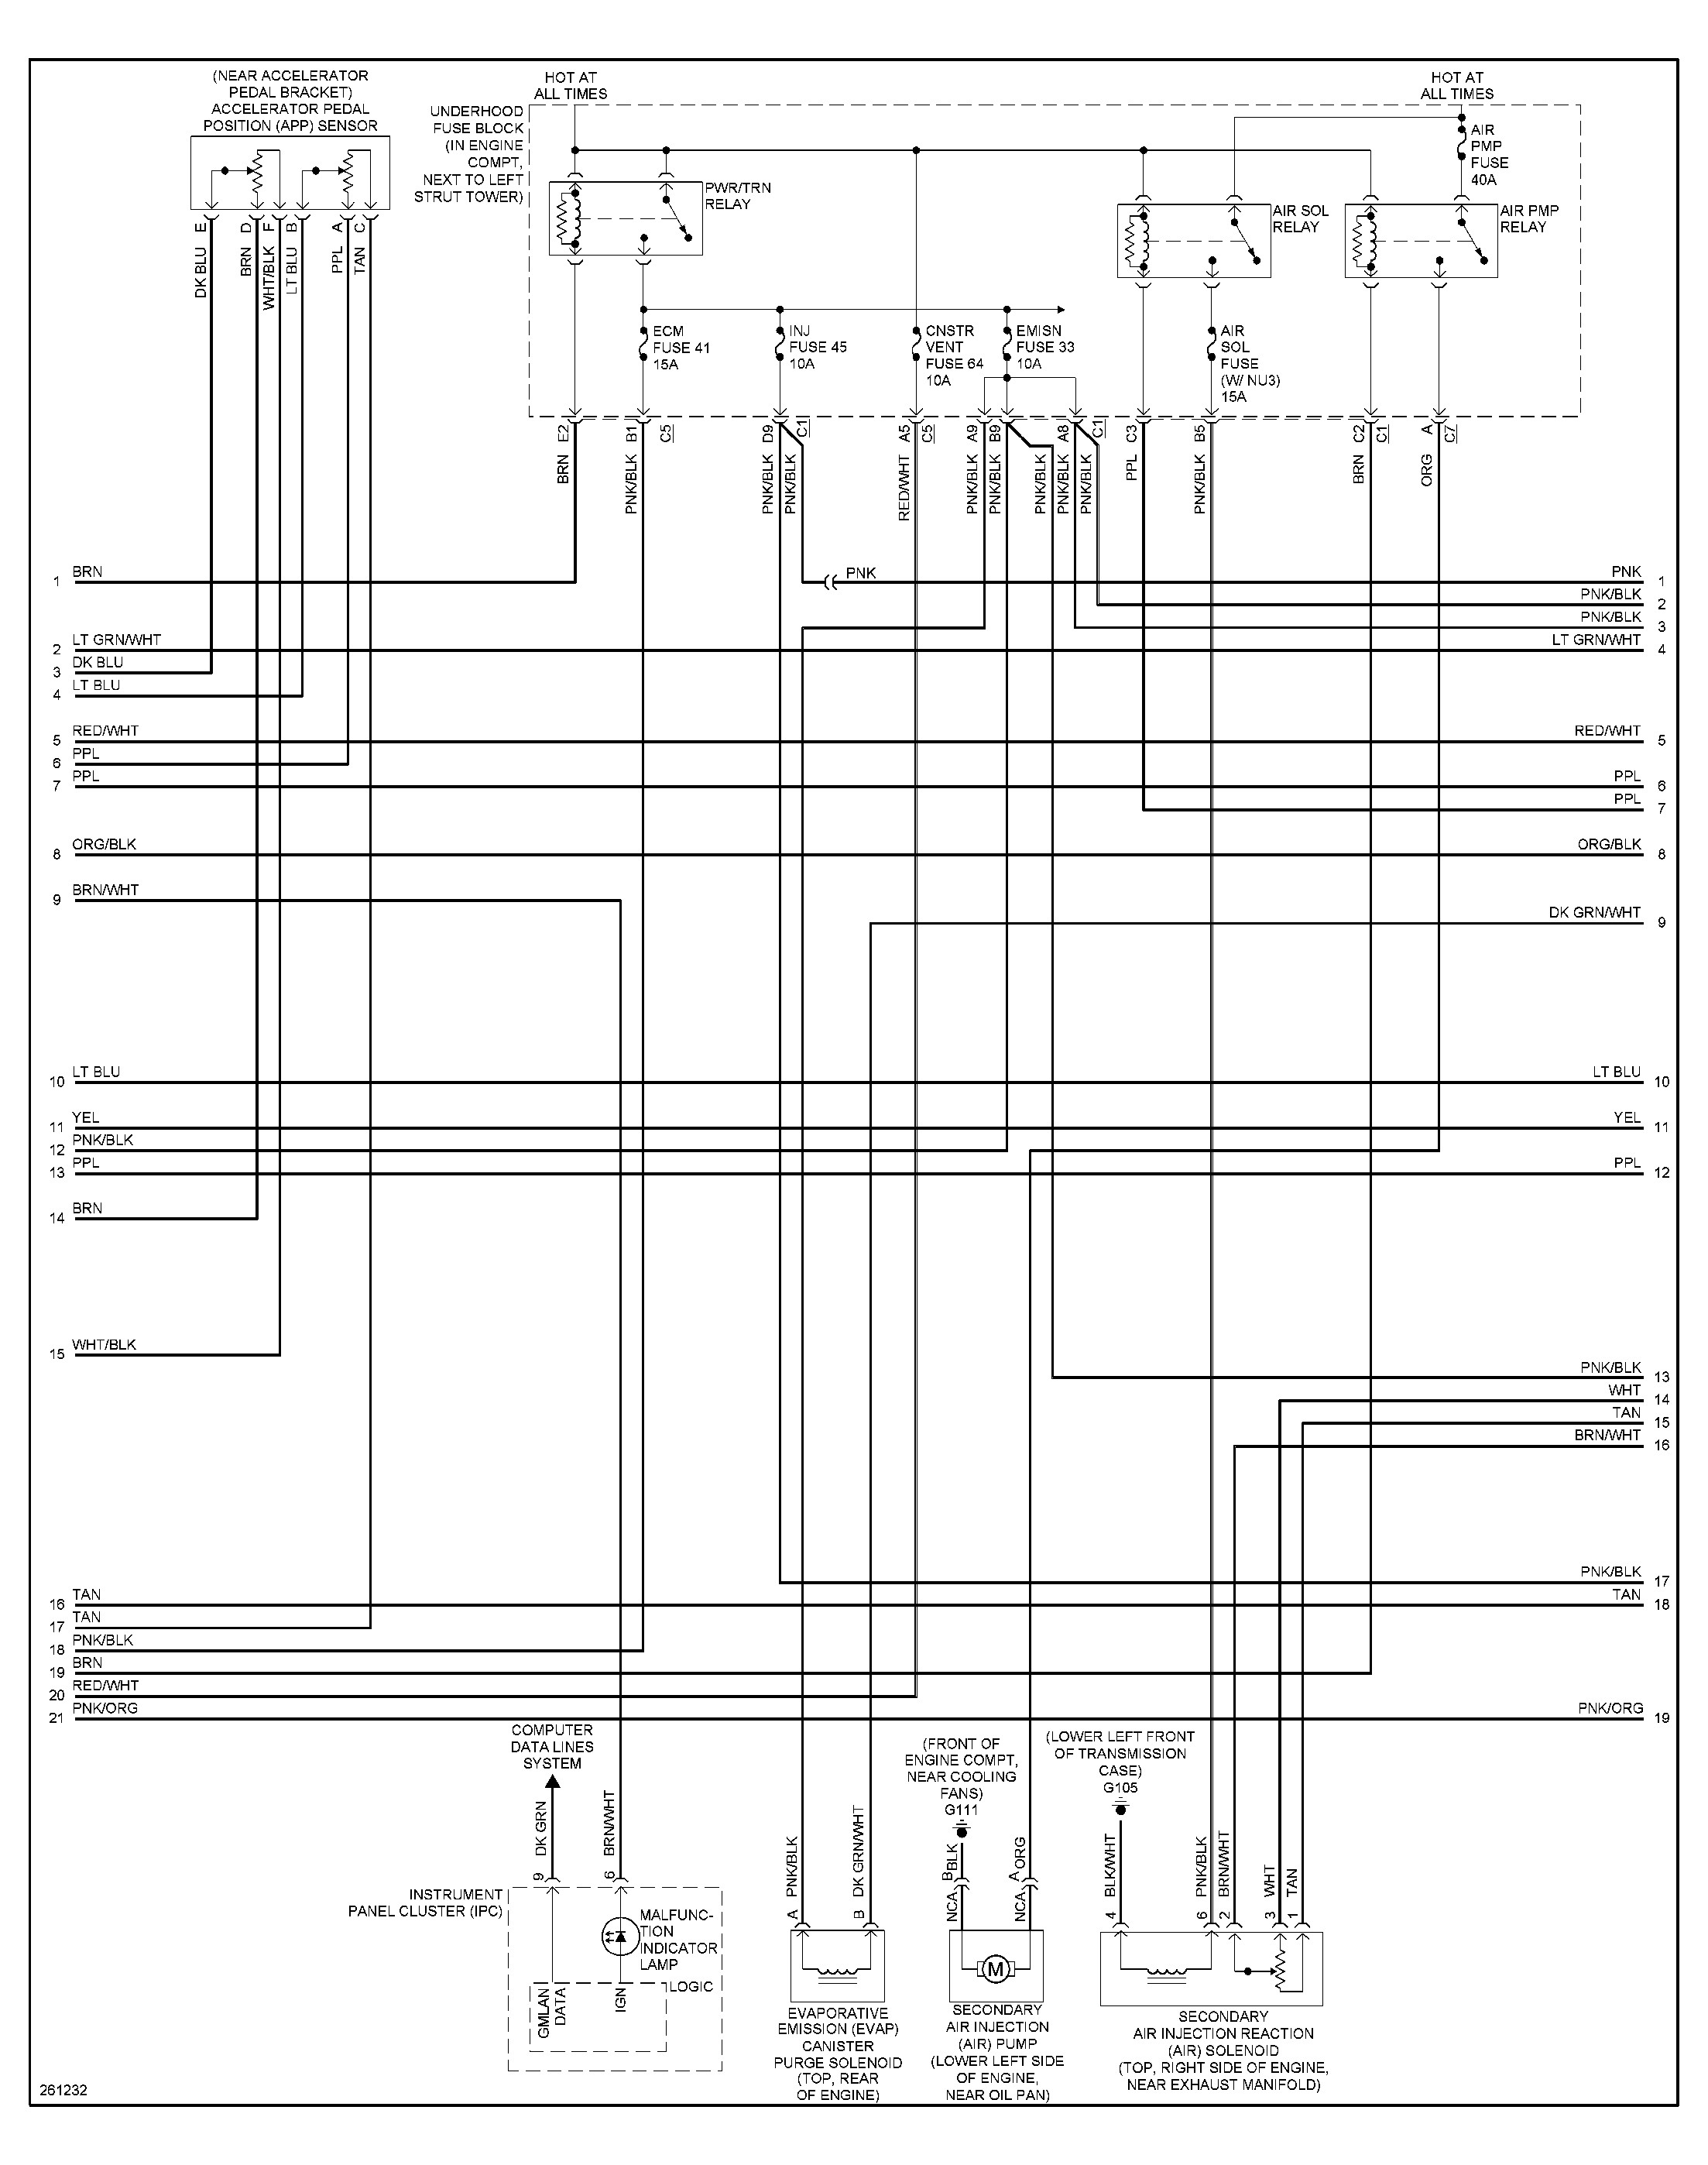 2005 Chevy Cavalier Engine Diagram 2007 Chevrolet Cobalt Wiring Diagrams Trusted Wiring Diagram Of 2005 Chevy Cavalier Engine Diagram